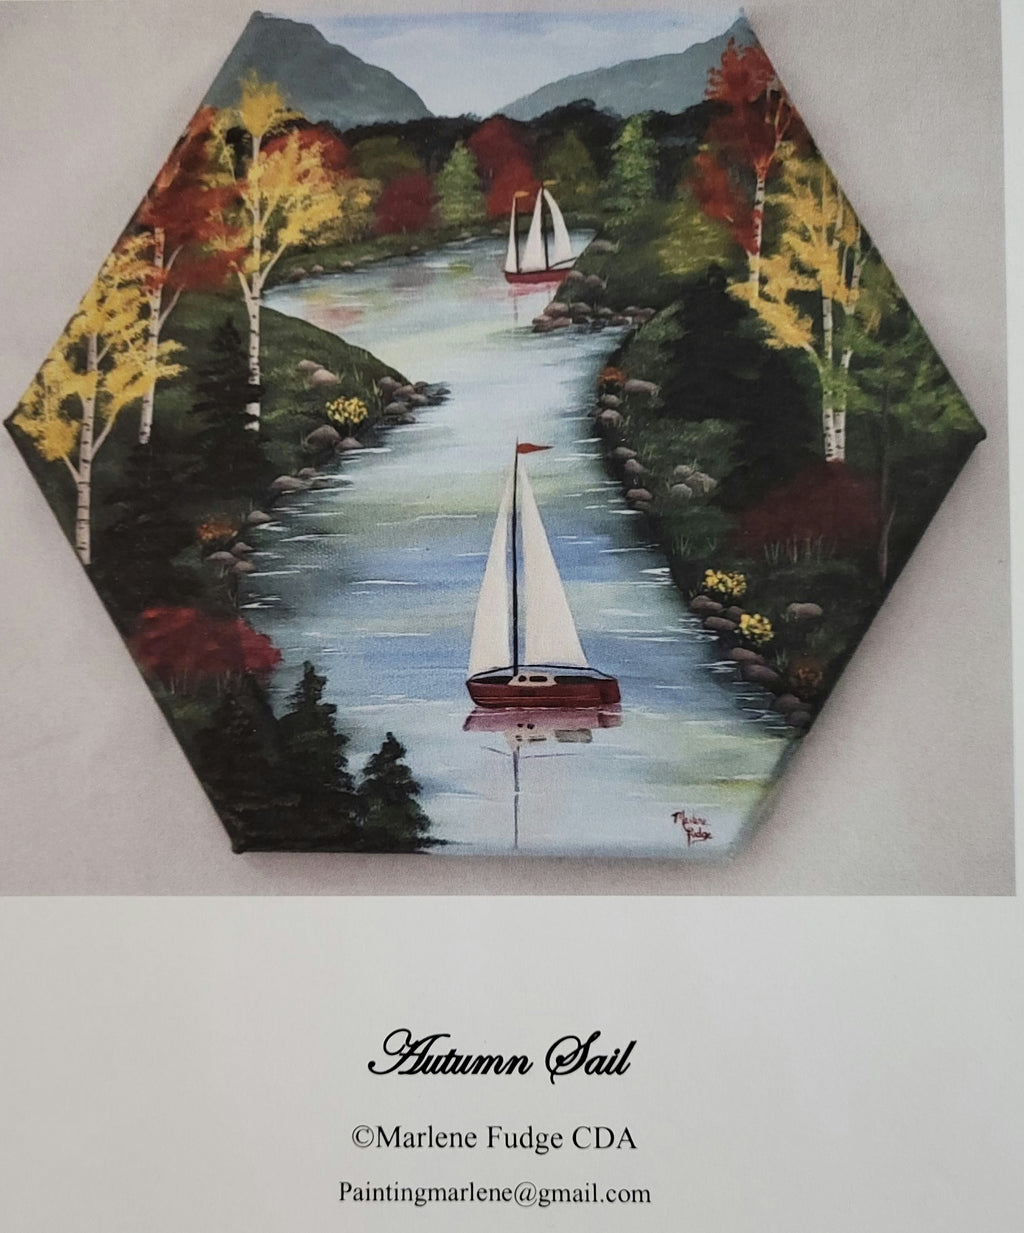 Autumn Sail packet by Marlene Fudge